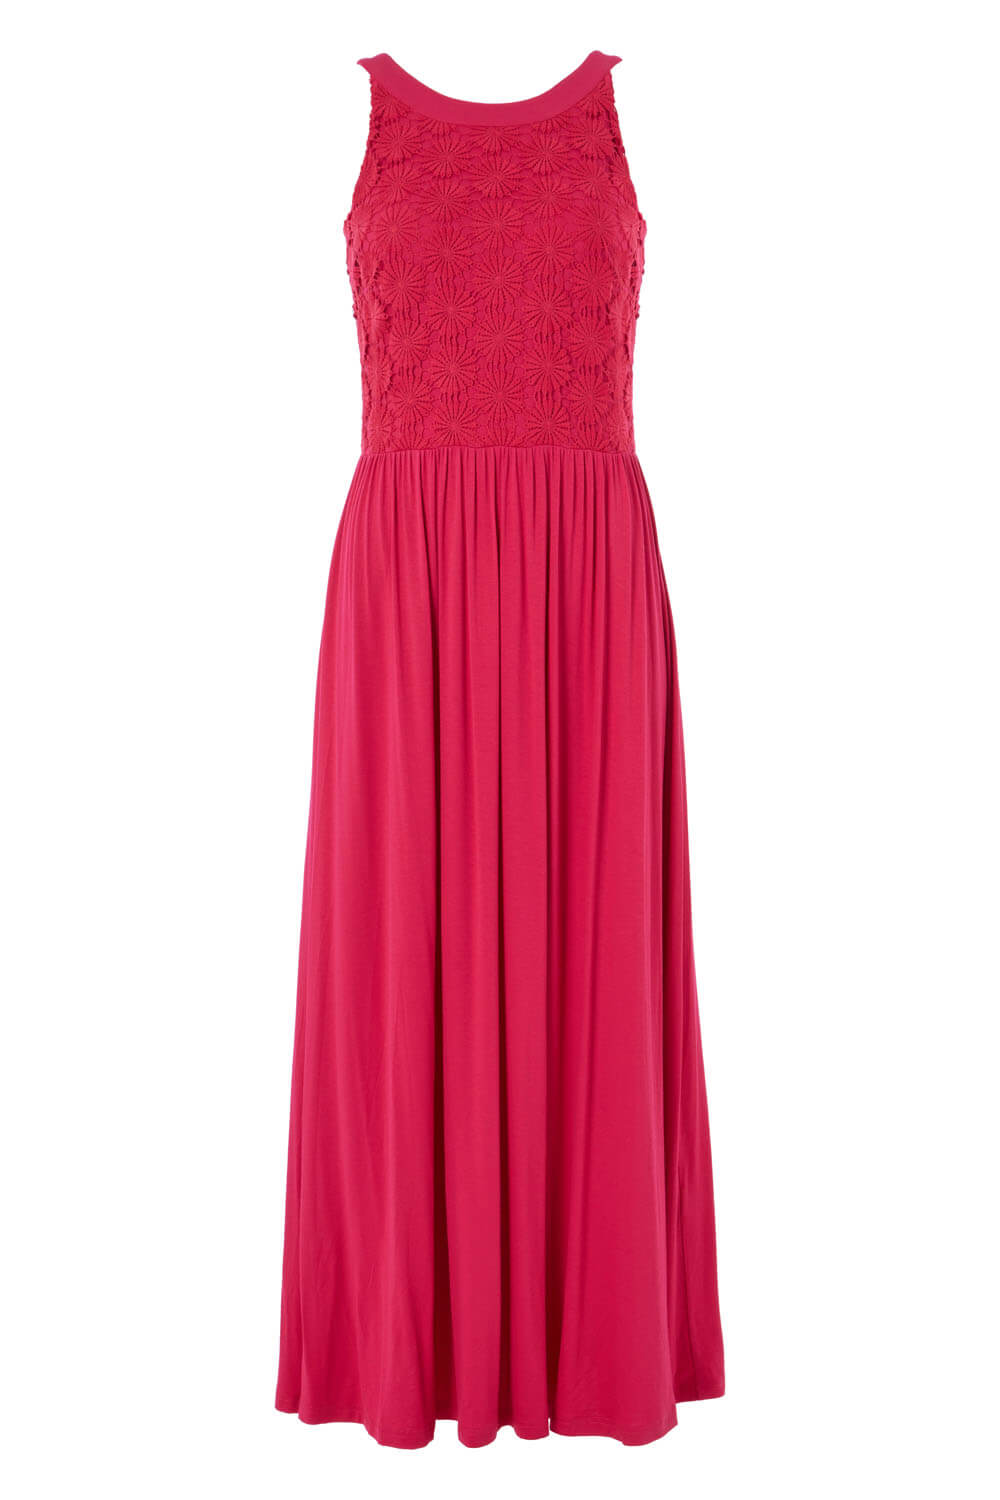 Lace Bodice Jersey Maxi Dress in Pink - Roman Originals UK